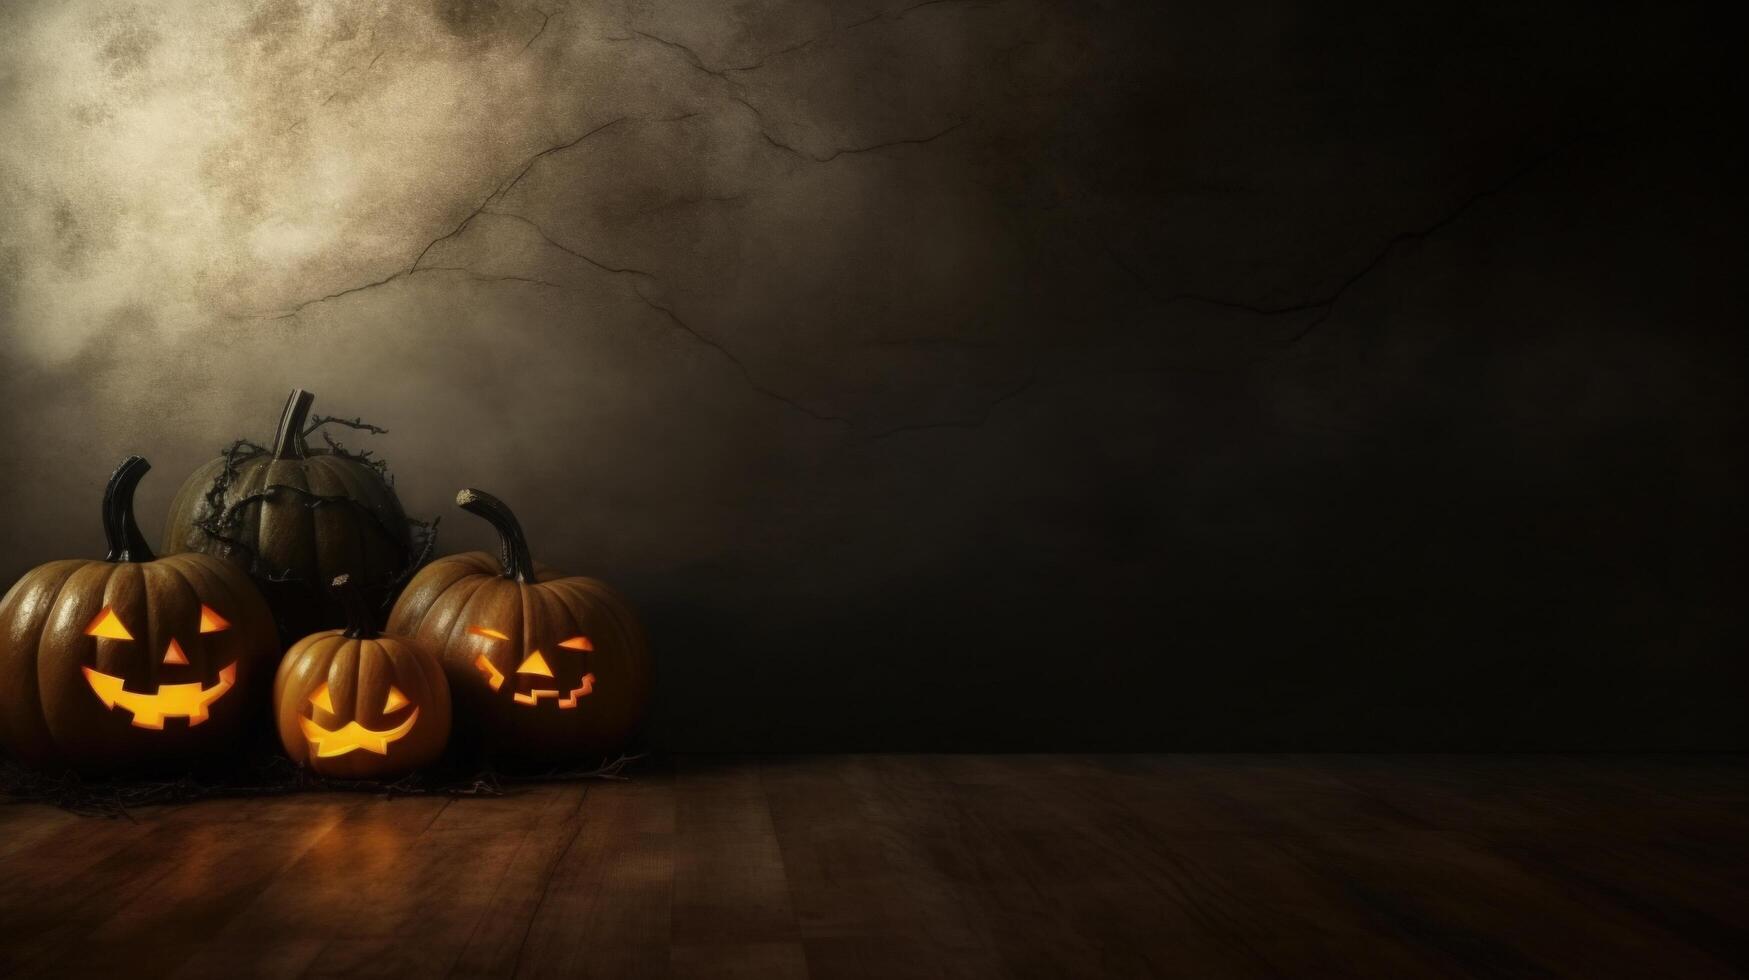 Spooky Halloween background. Illustration photo